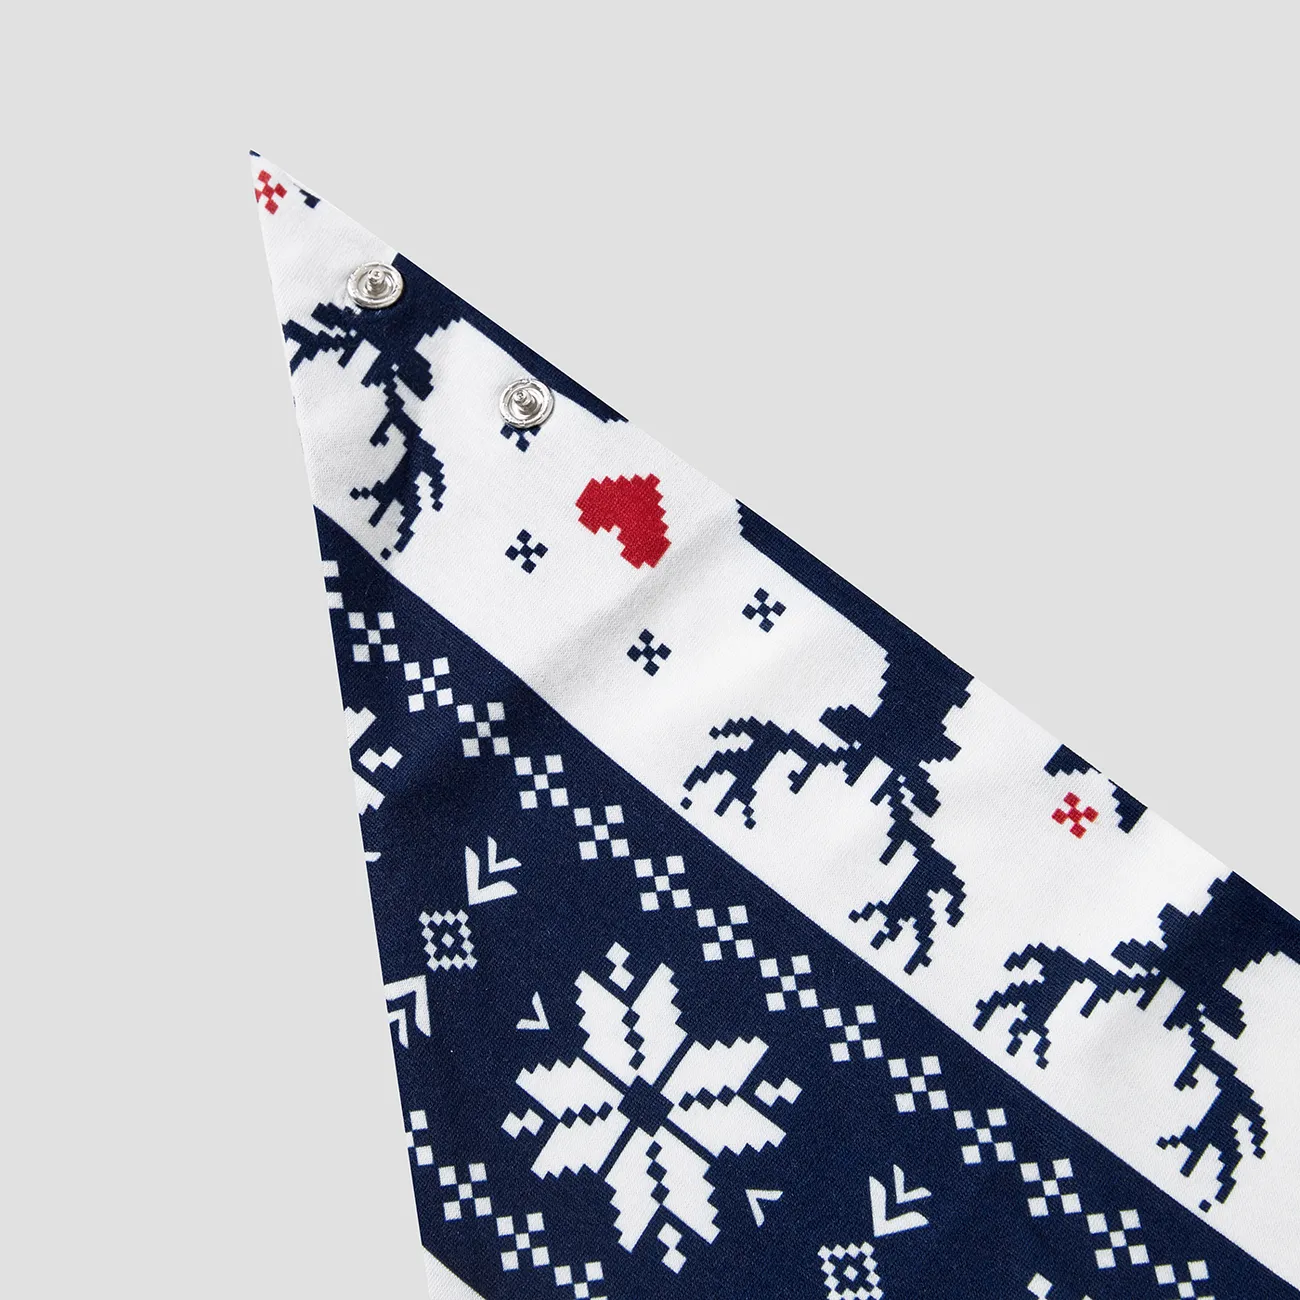 Weihnachten Familien-Looks Langärmelig Familien-Outfits Pyjamas (Flame Resistant) tiefblau big image 1